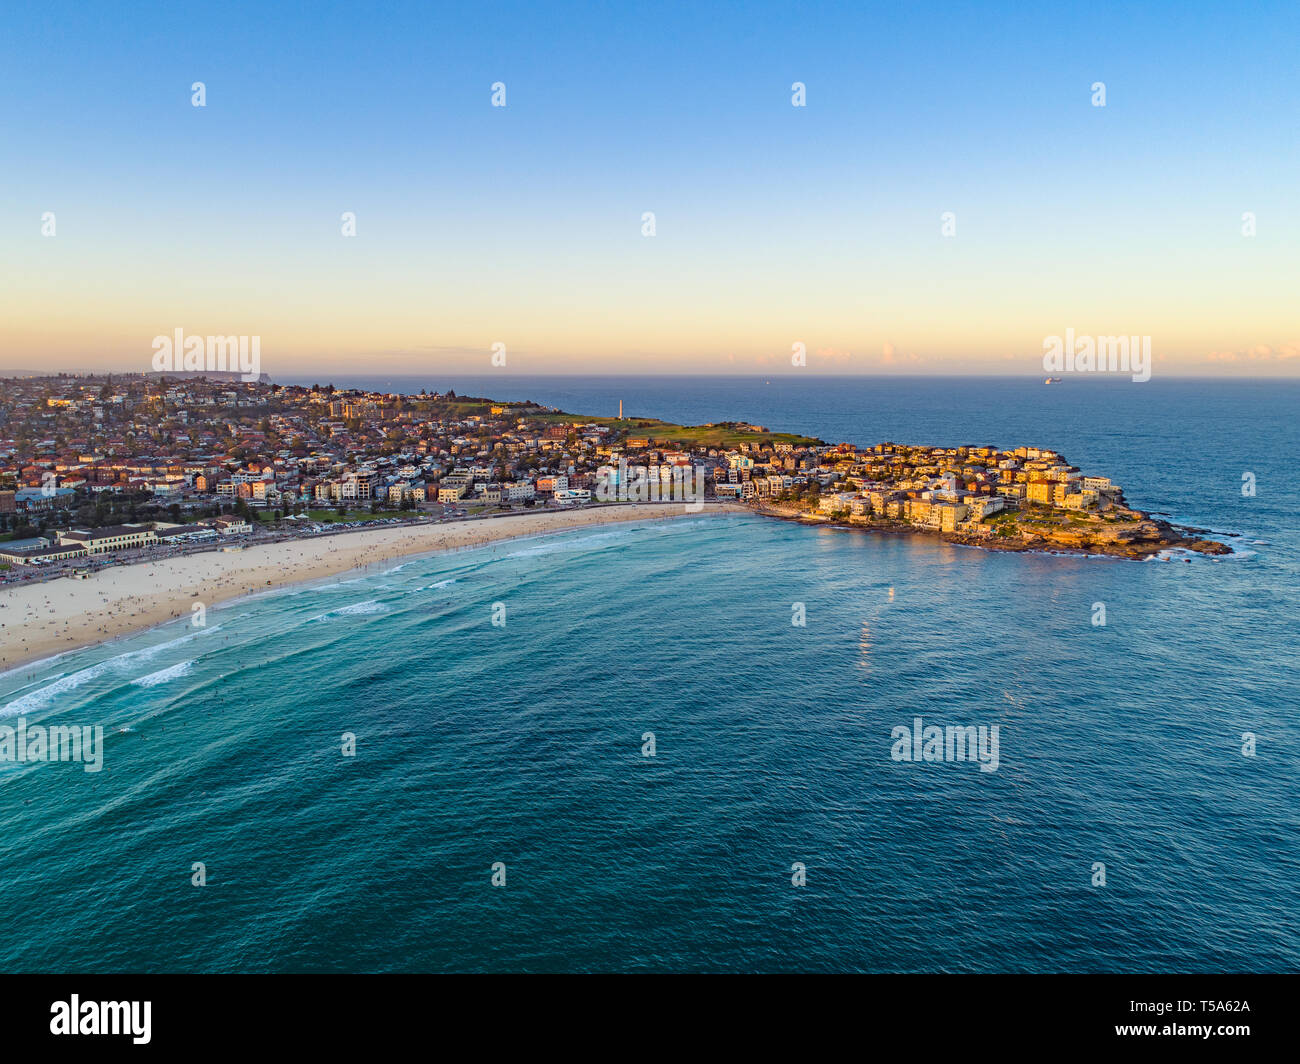 Bondi Beach Drone Shot at Sunset with Sydney CBD in background at Sunset Stock Photo